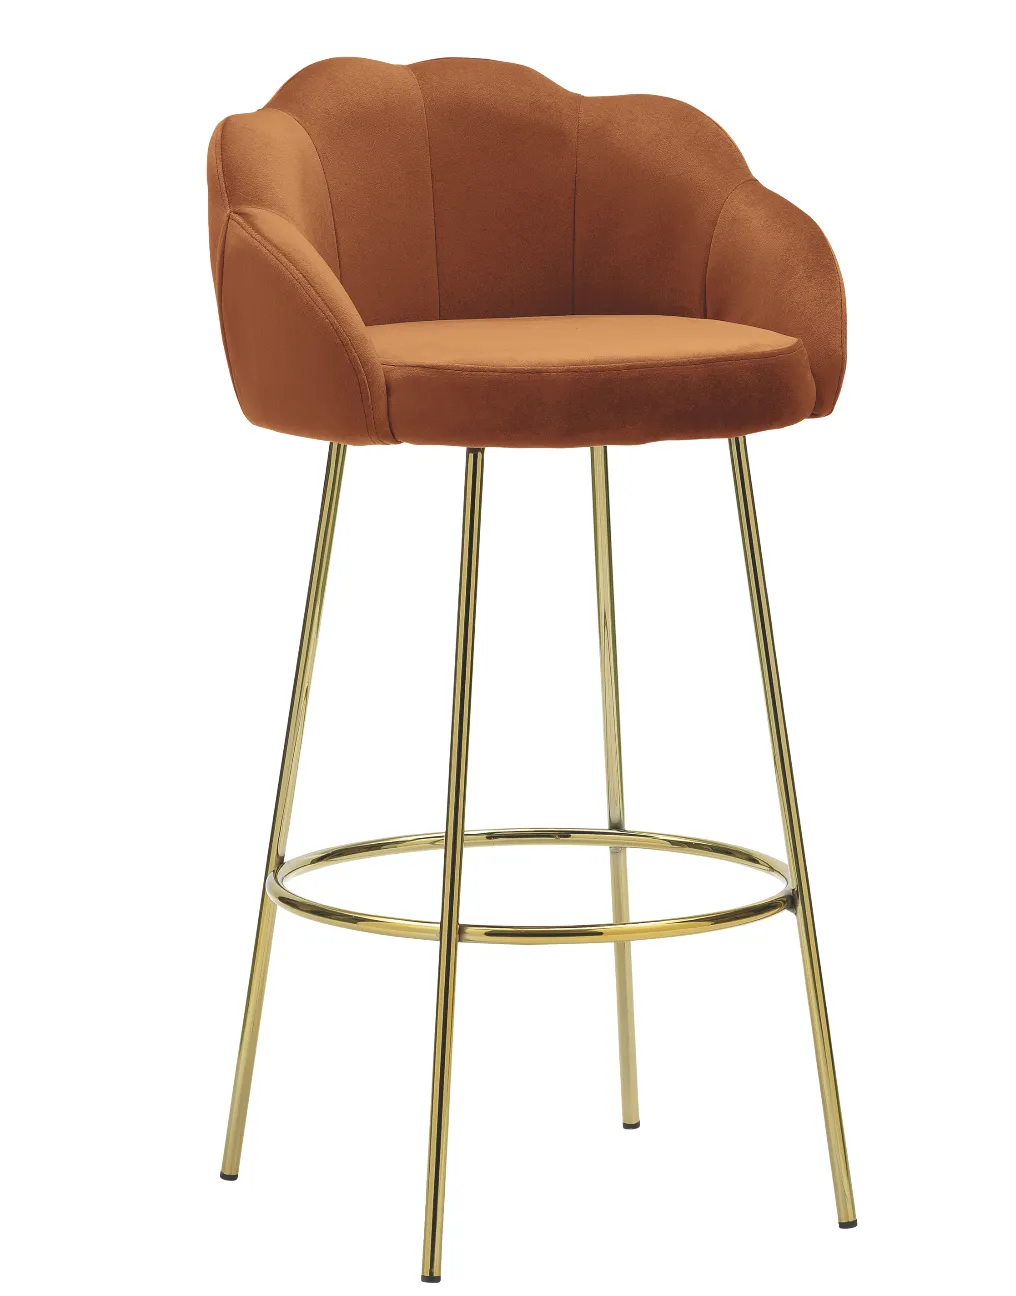 Ariel bar stool with backrest in Burnt Orange, £159, Cult Furniture